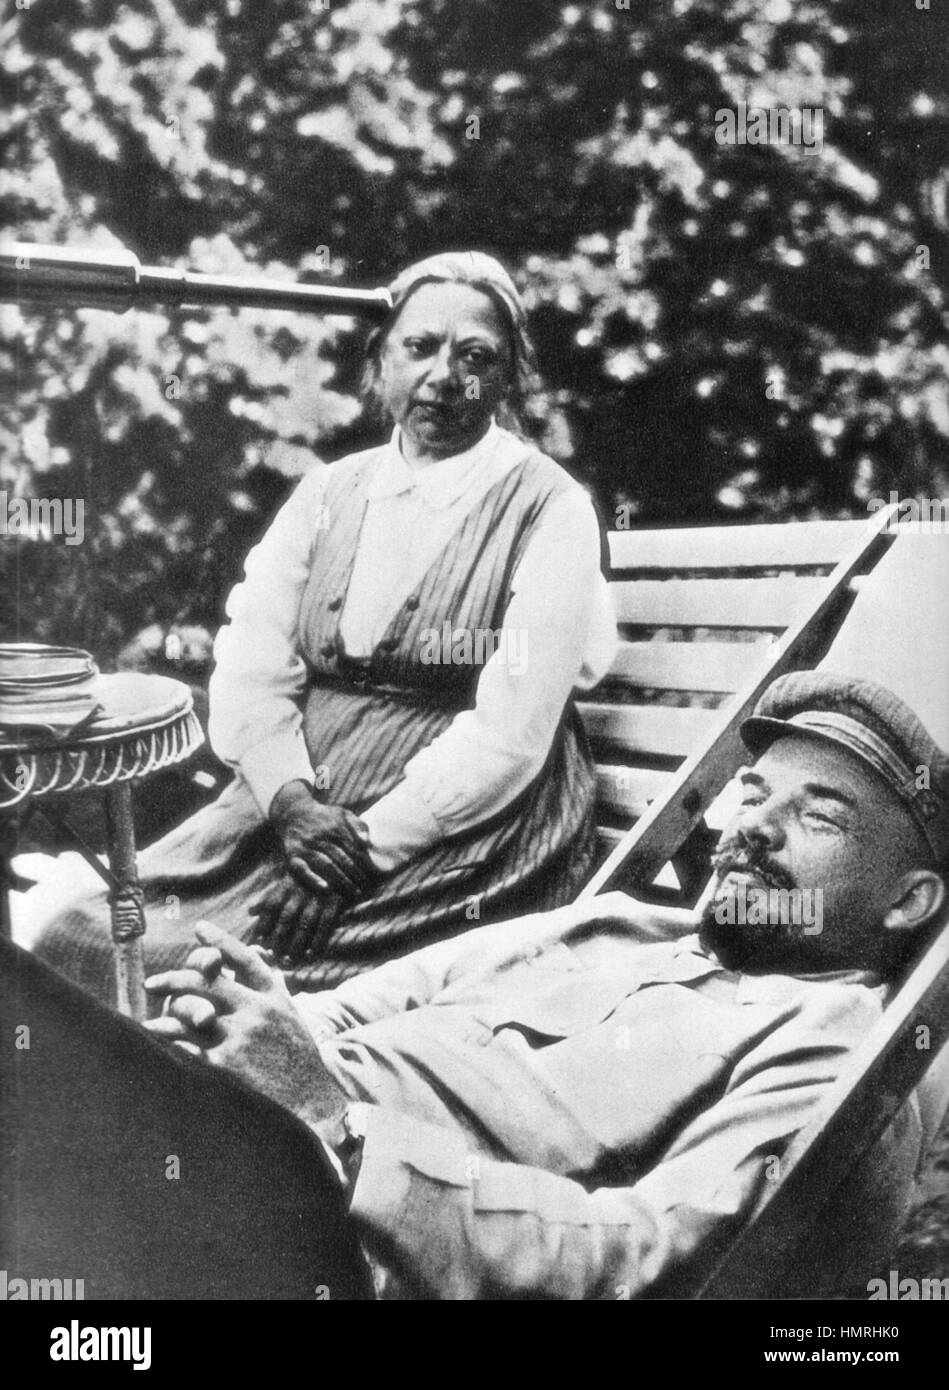 Russischer revolutionär VLADIMIR LENIN (1870-1924) mit seiner Frau Nadezhda Krupskaya 1922 Stockfoto